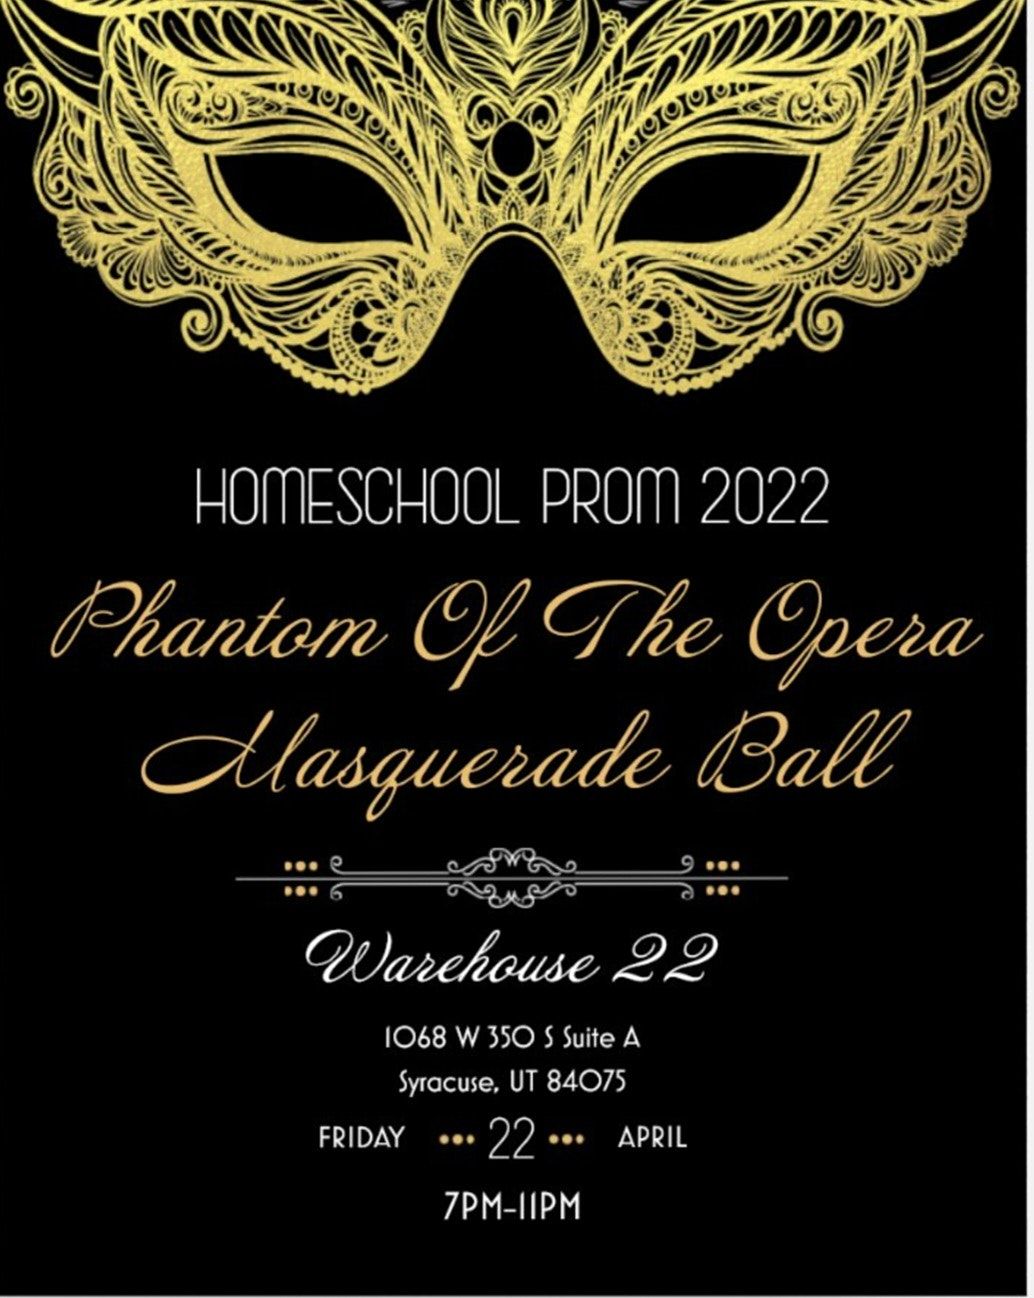 homeschool-prom-2022-warehouse-22-event-center-syracuse-ut-april